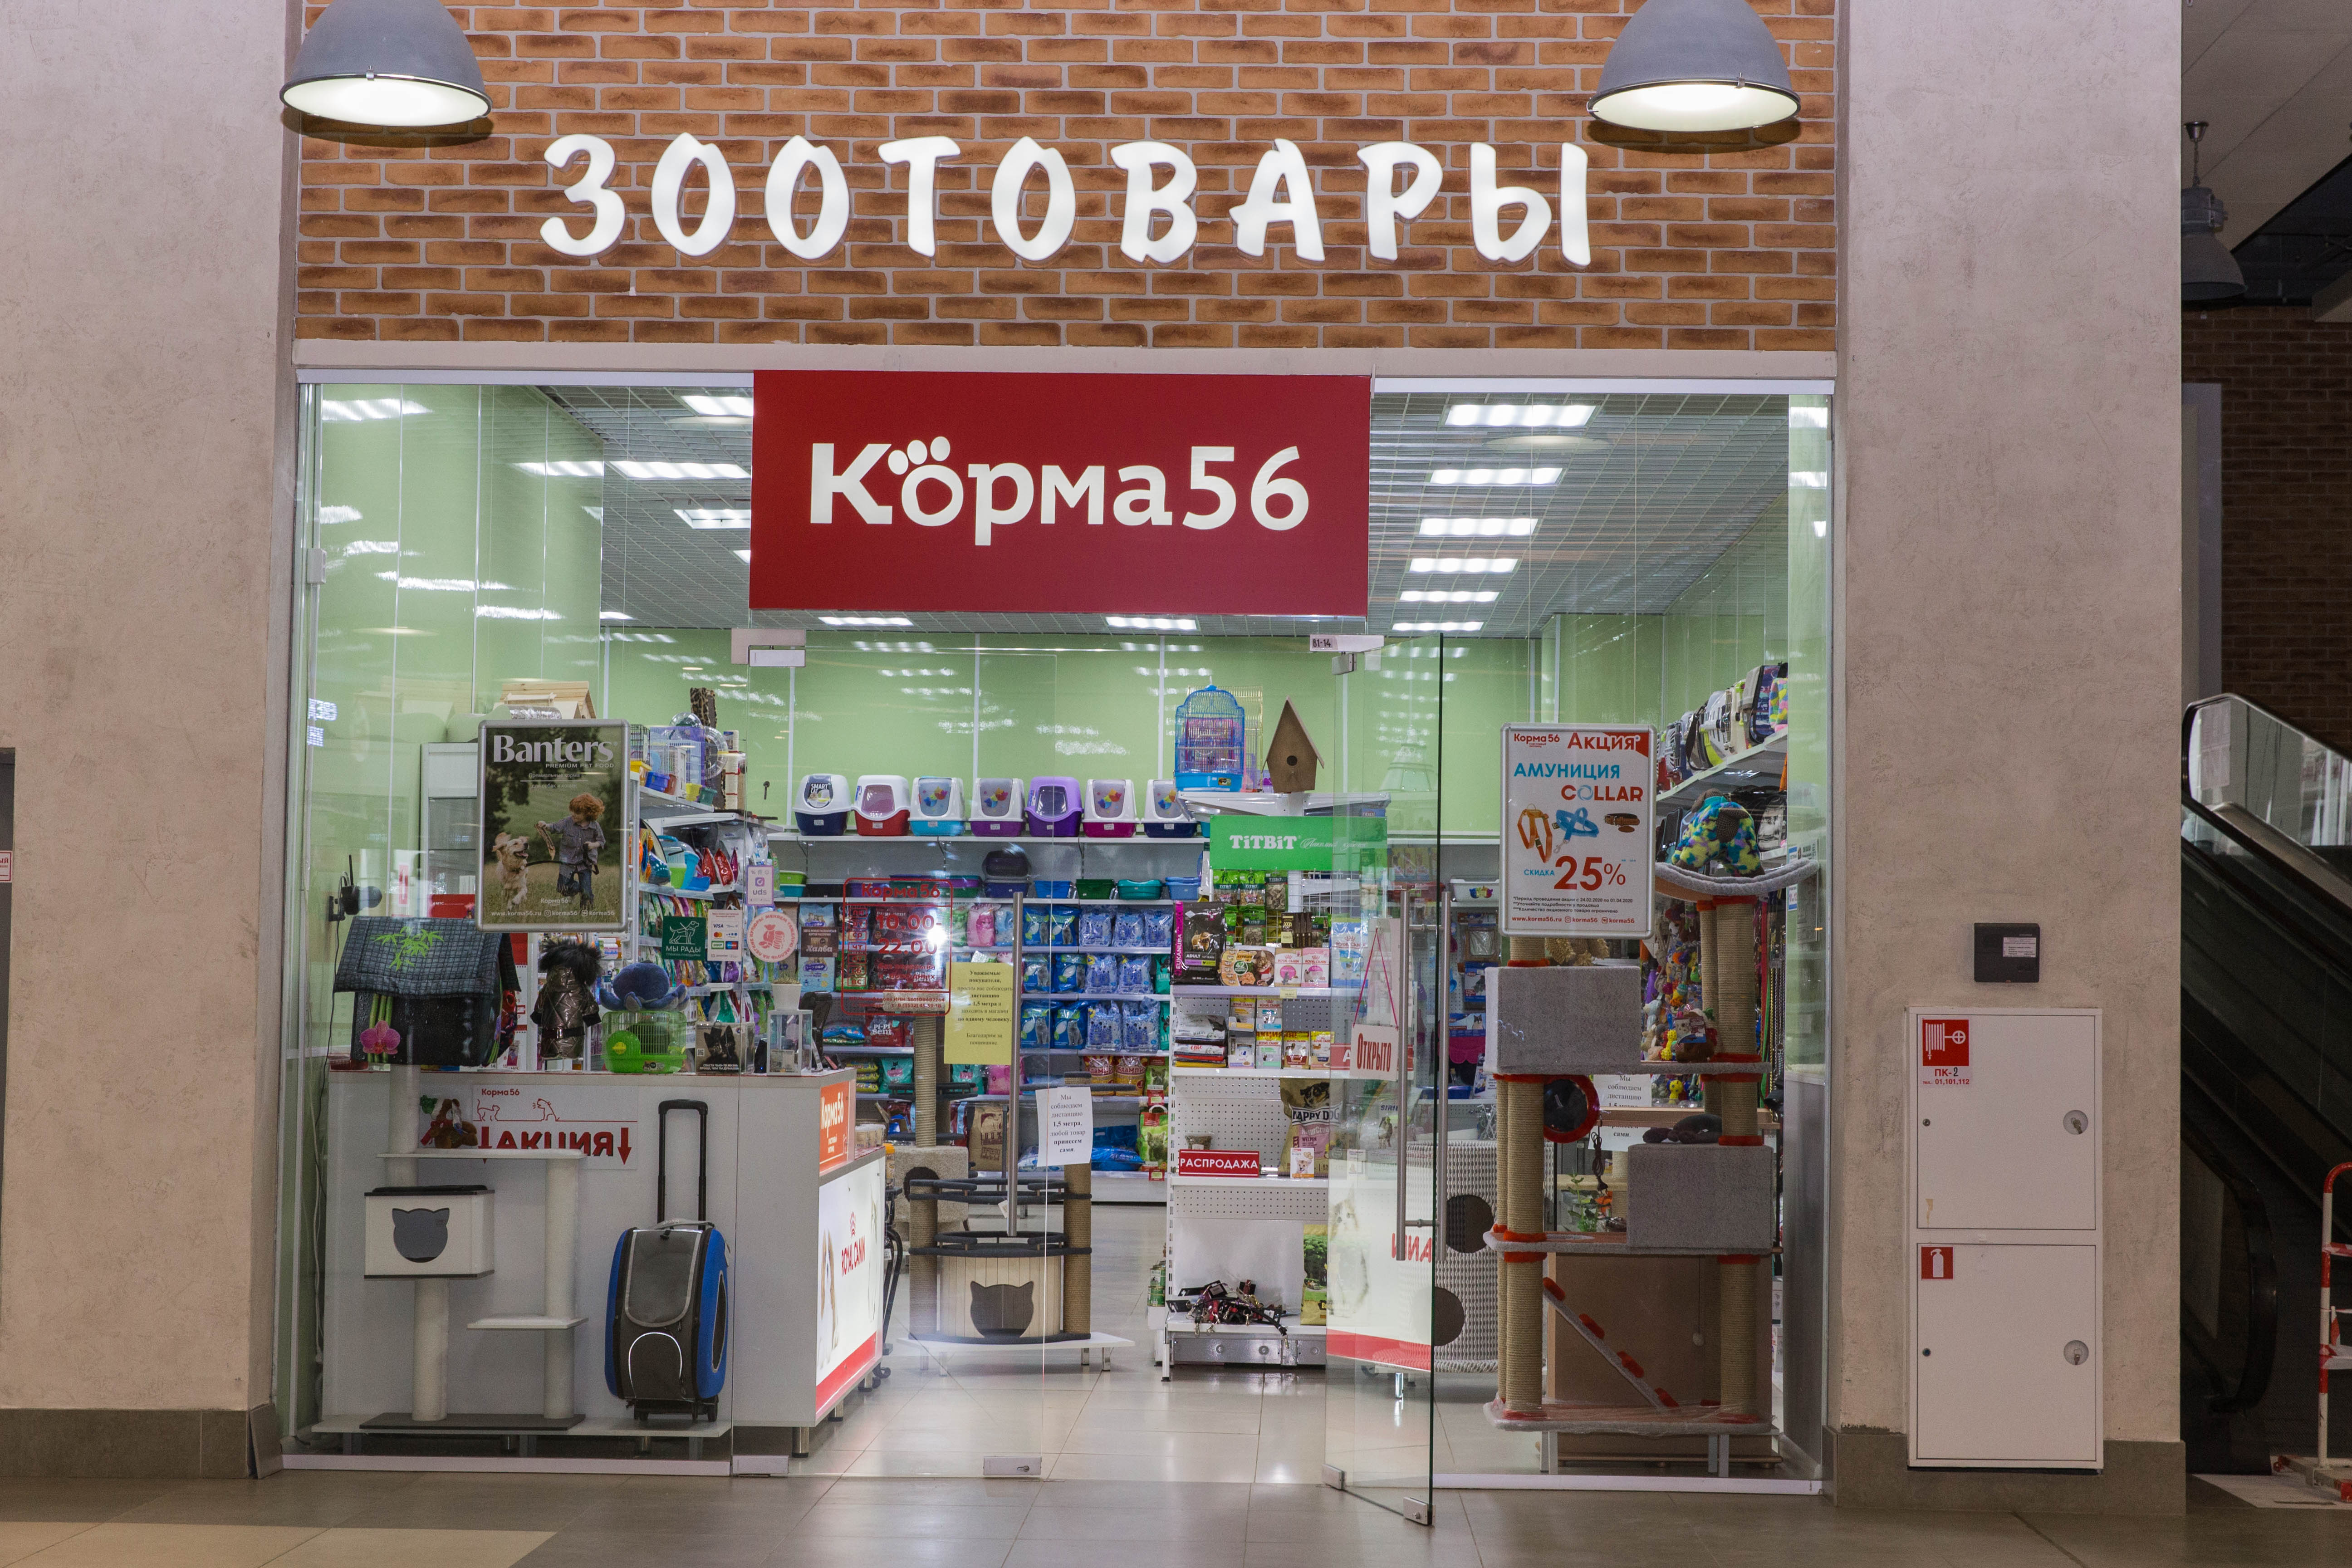 Армада Интернет Магазин Иваново